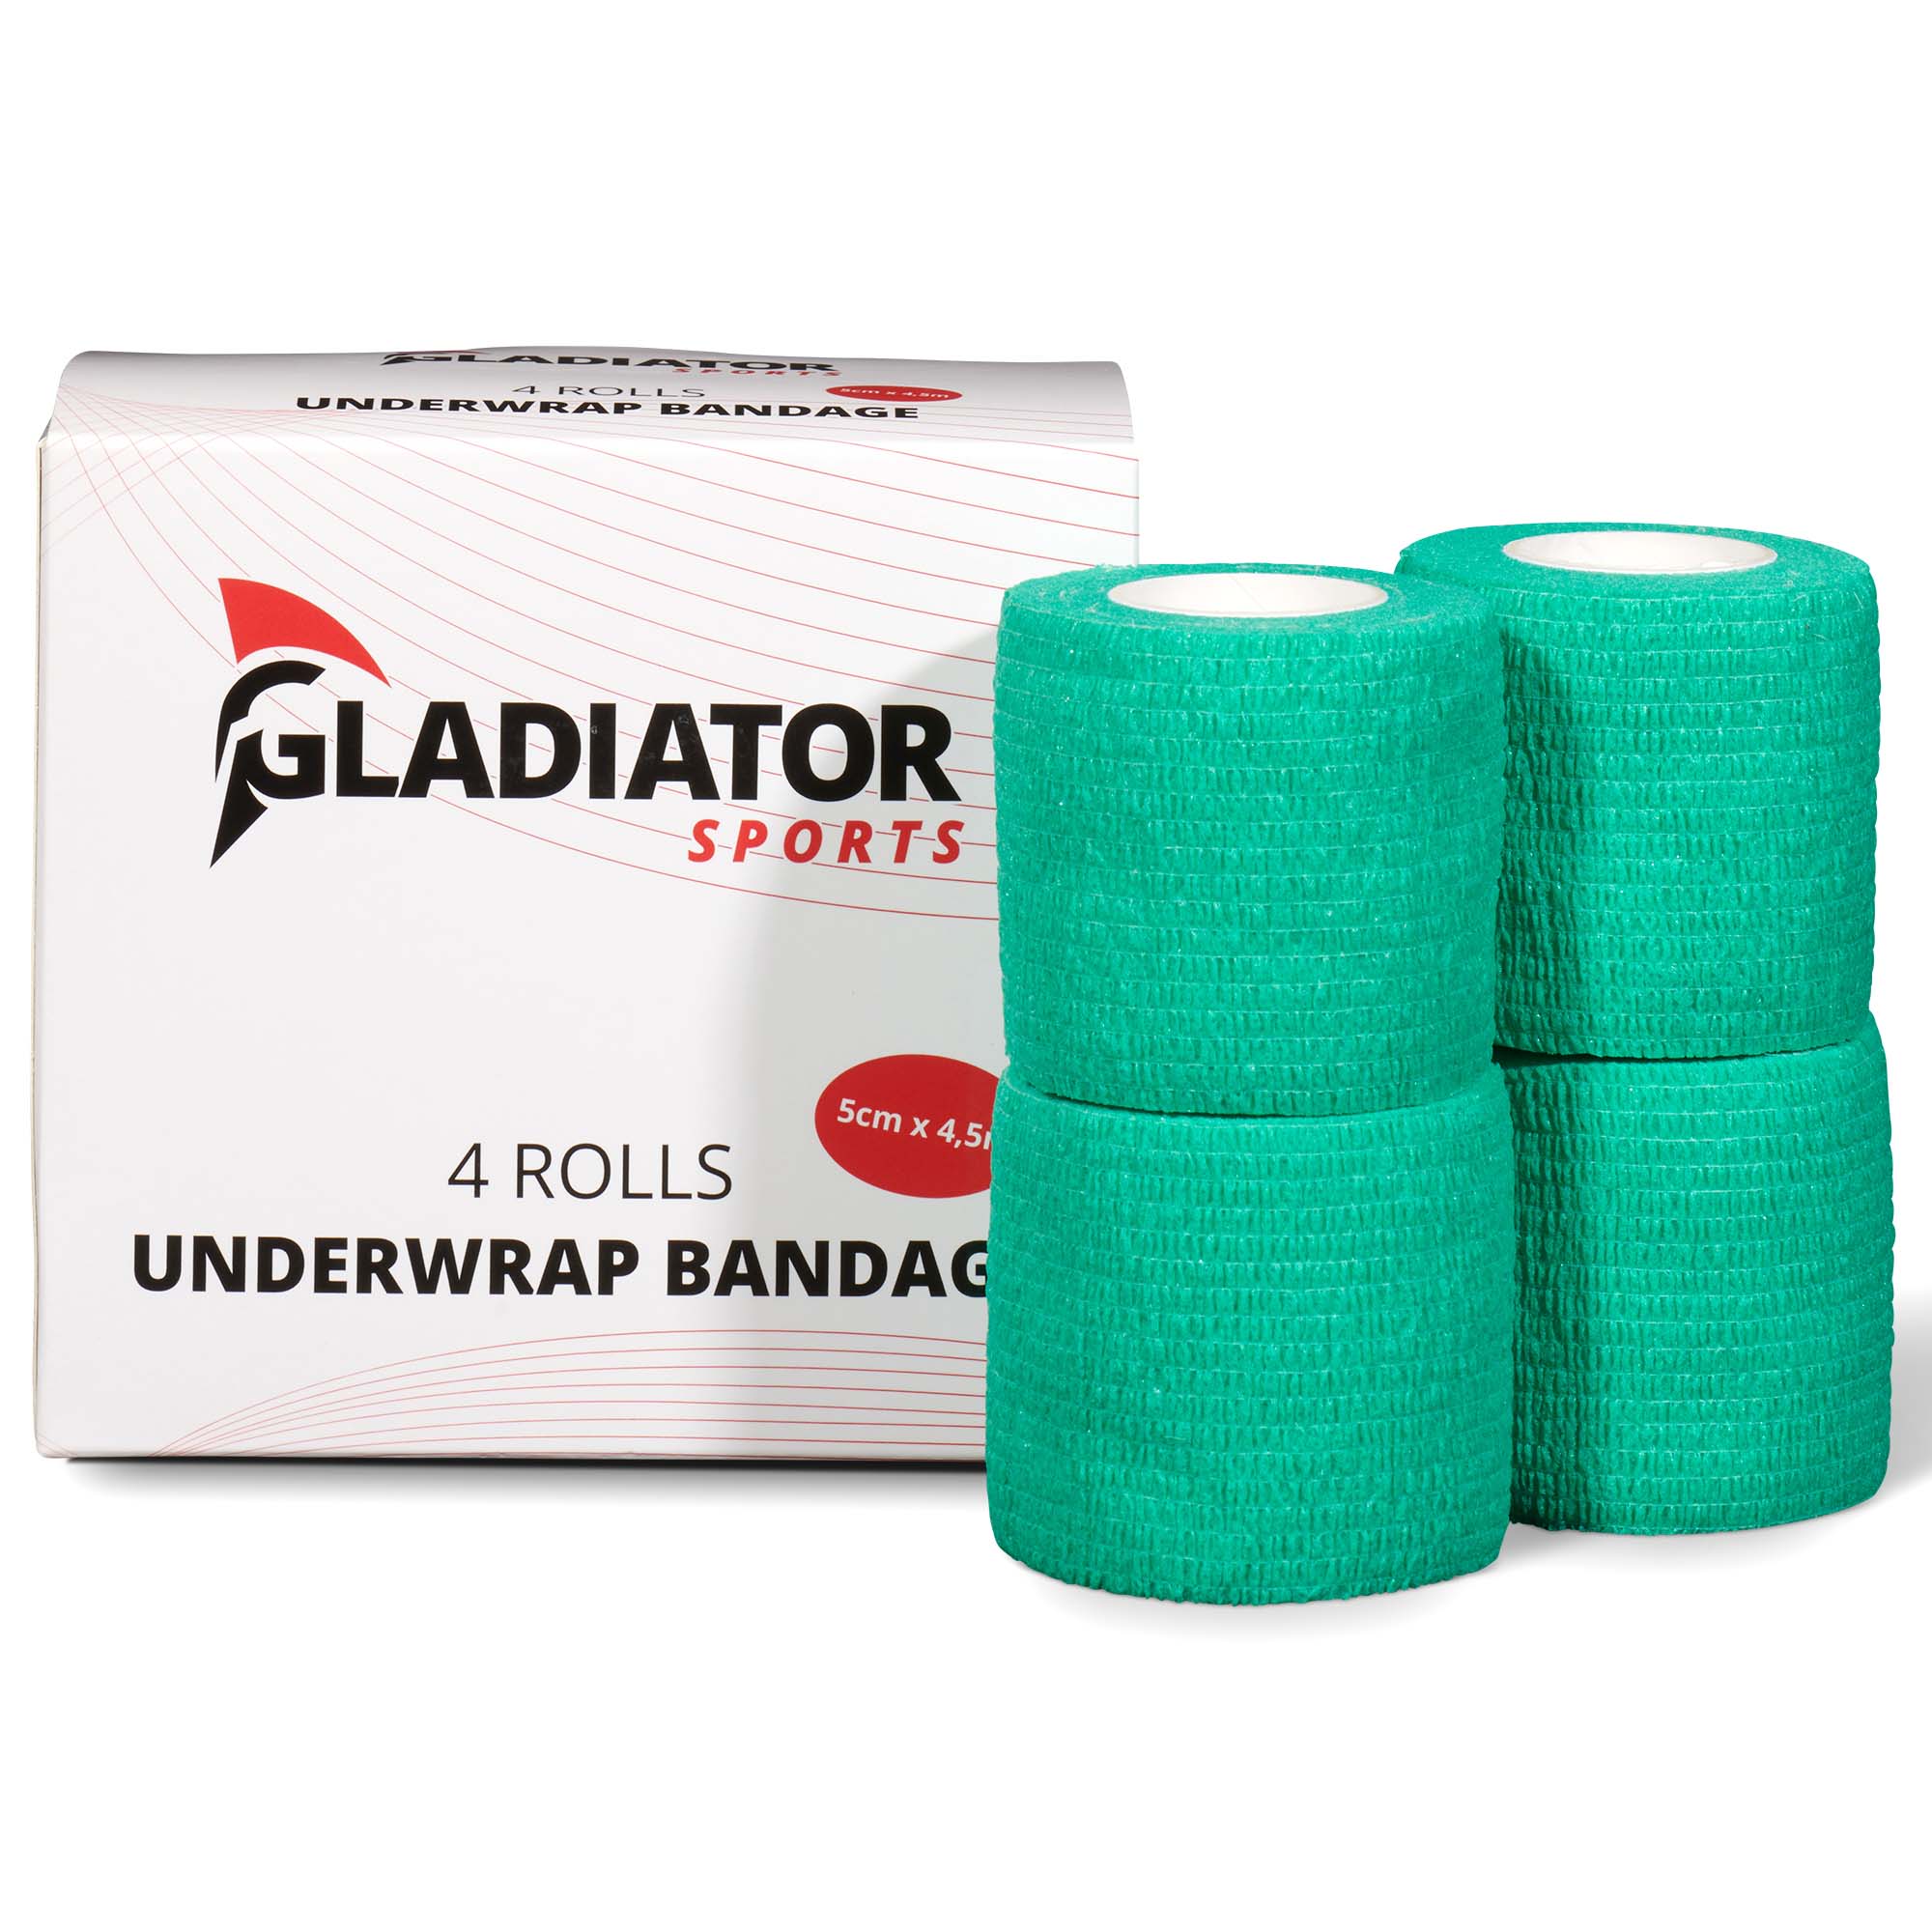 Gladiator Sports underwrap bandage 4 rolls with box green